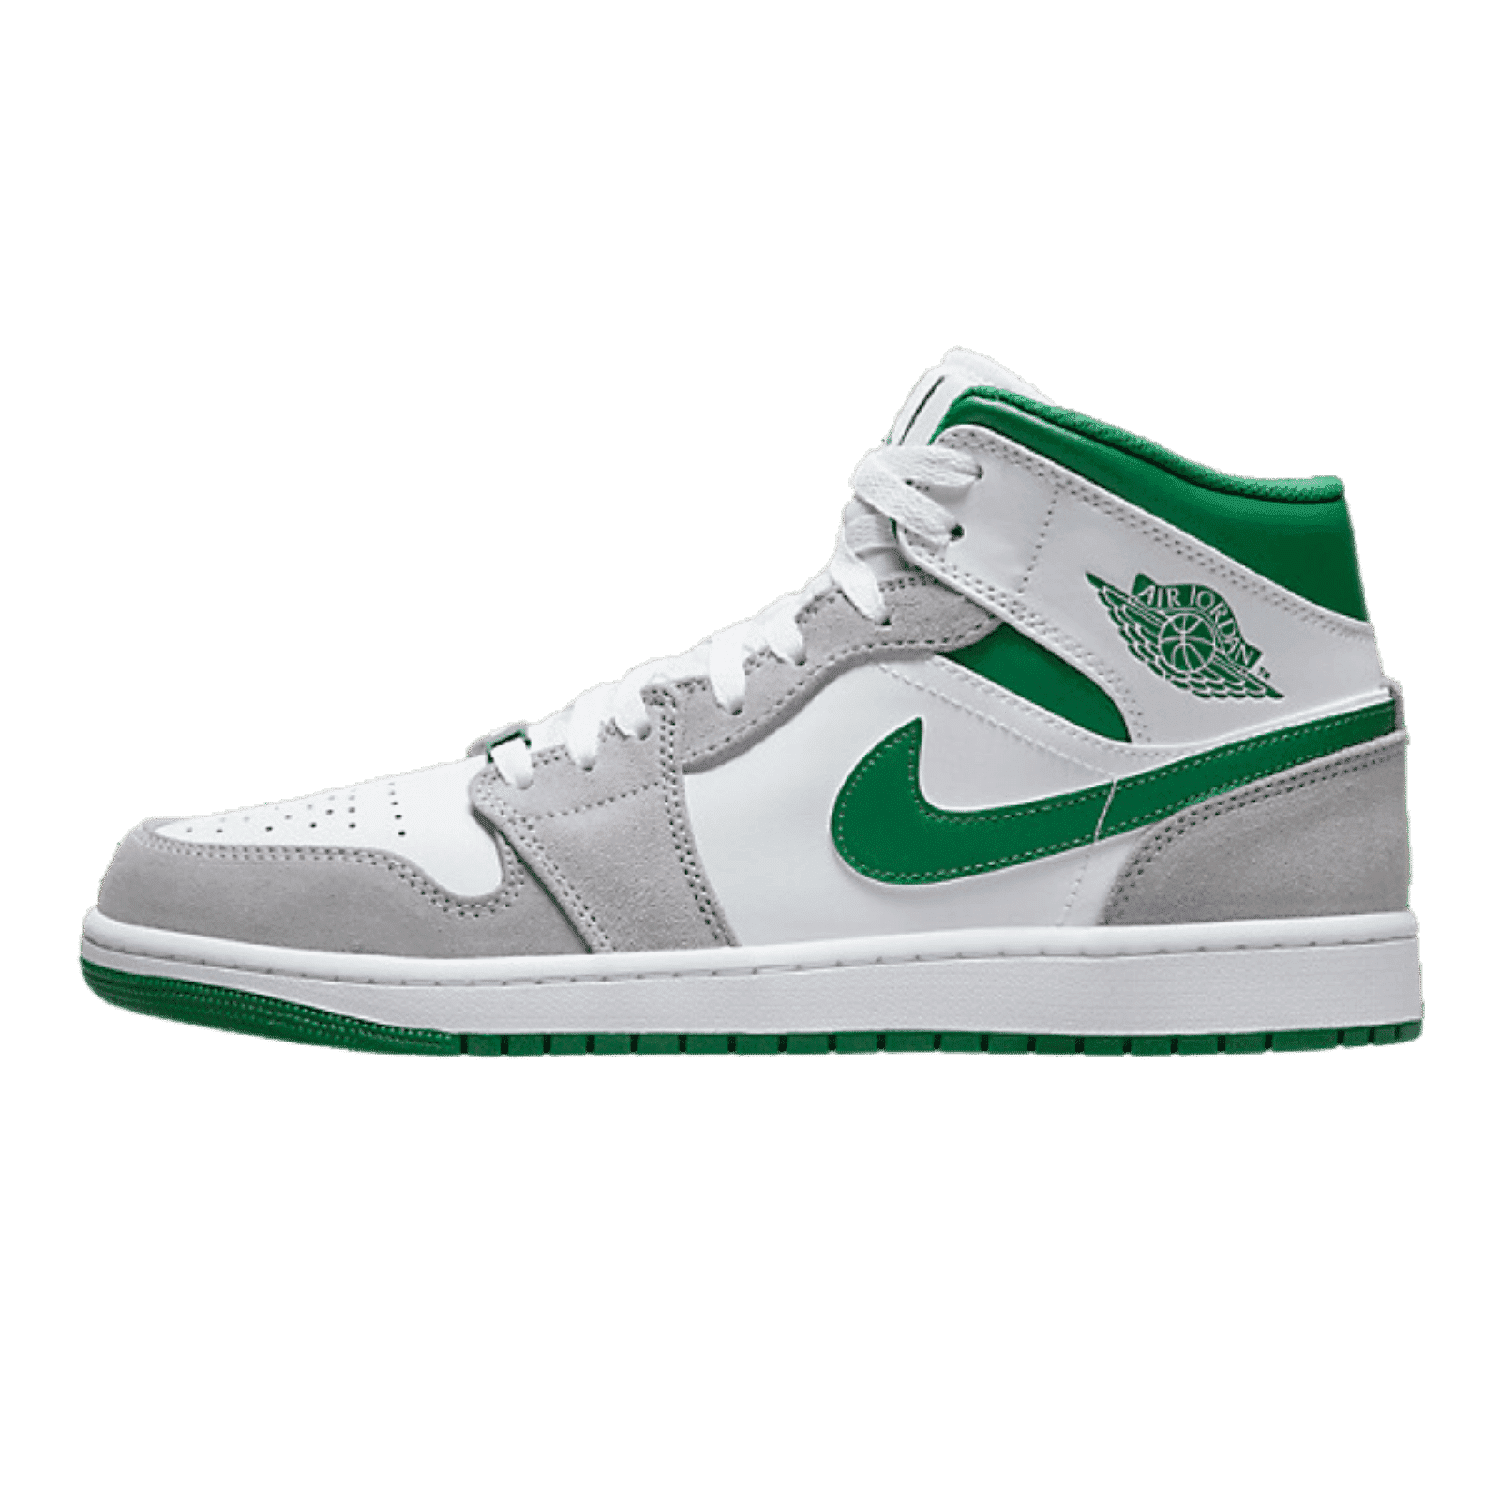 Jordan 1 Mid SE Grey Green - Sneakerterritory; Sneaker Territory